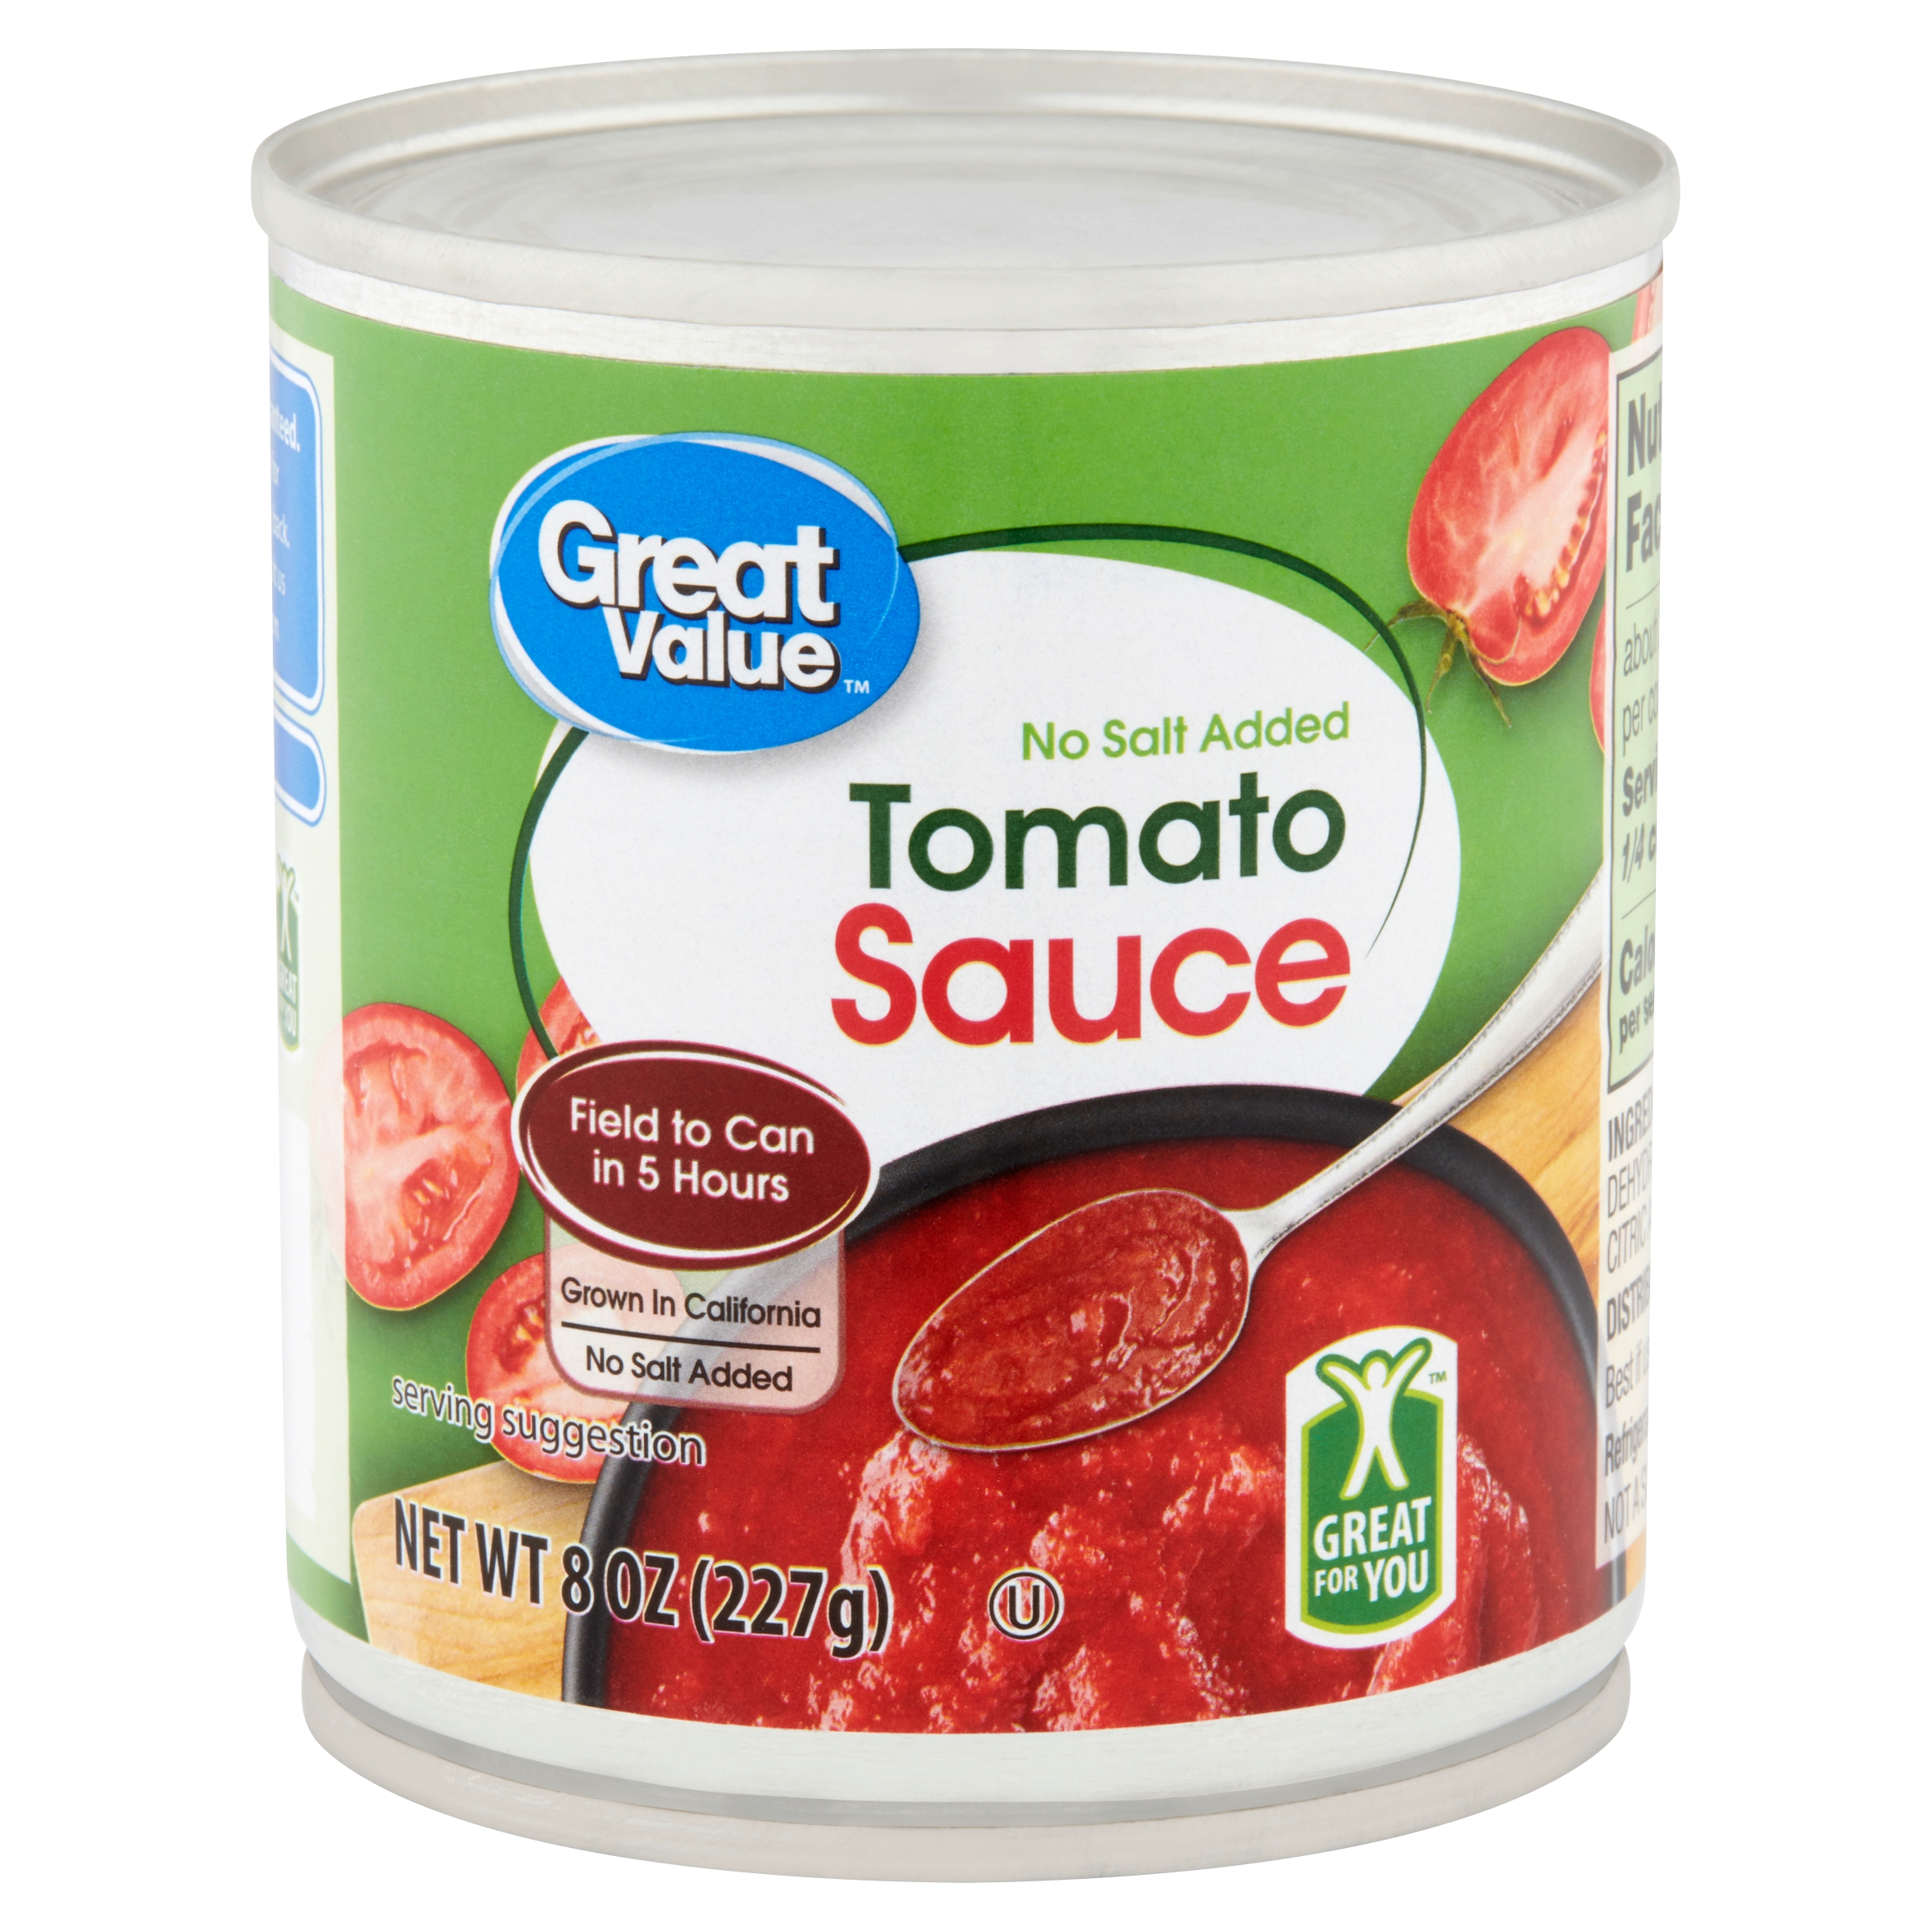 Great Value No Salt Added Tomato Sauce, 8 Oz Image